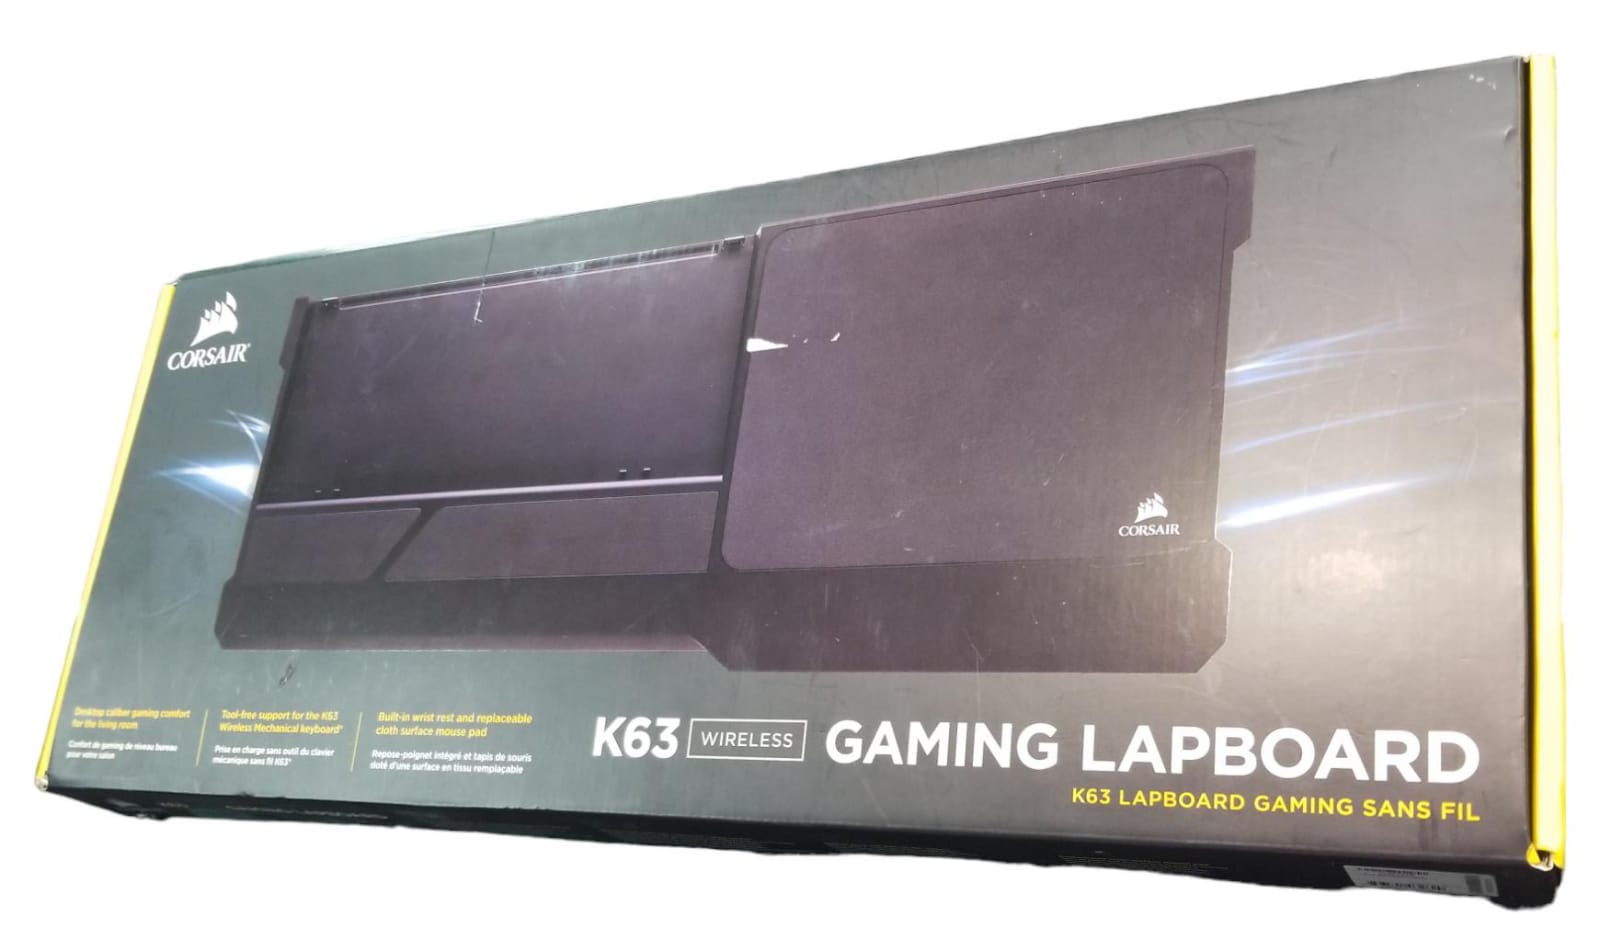 Corsair - K63 - Gaming Lapboard - Boxed